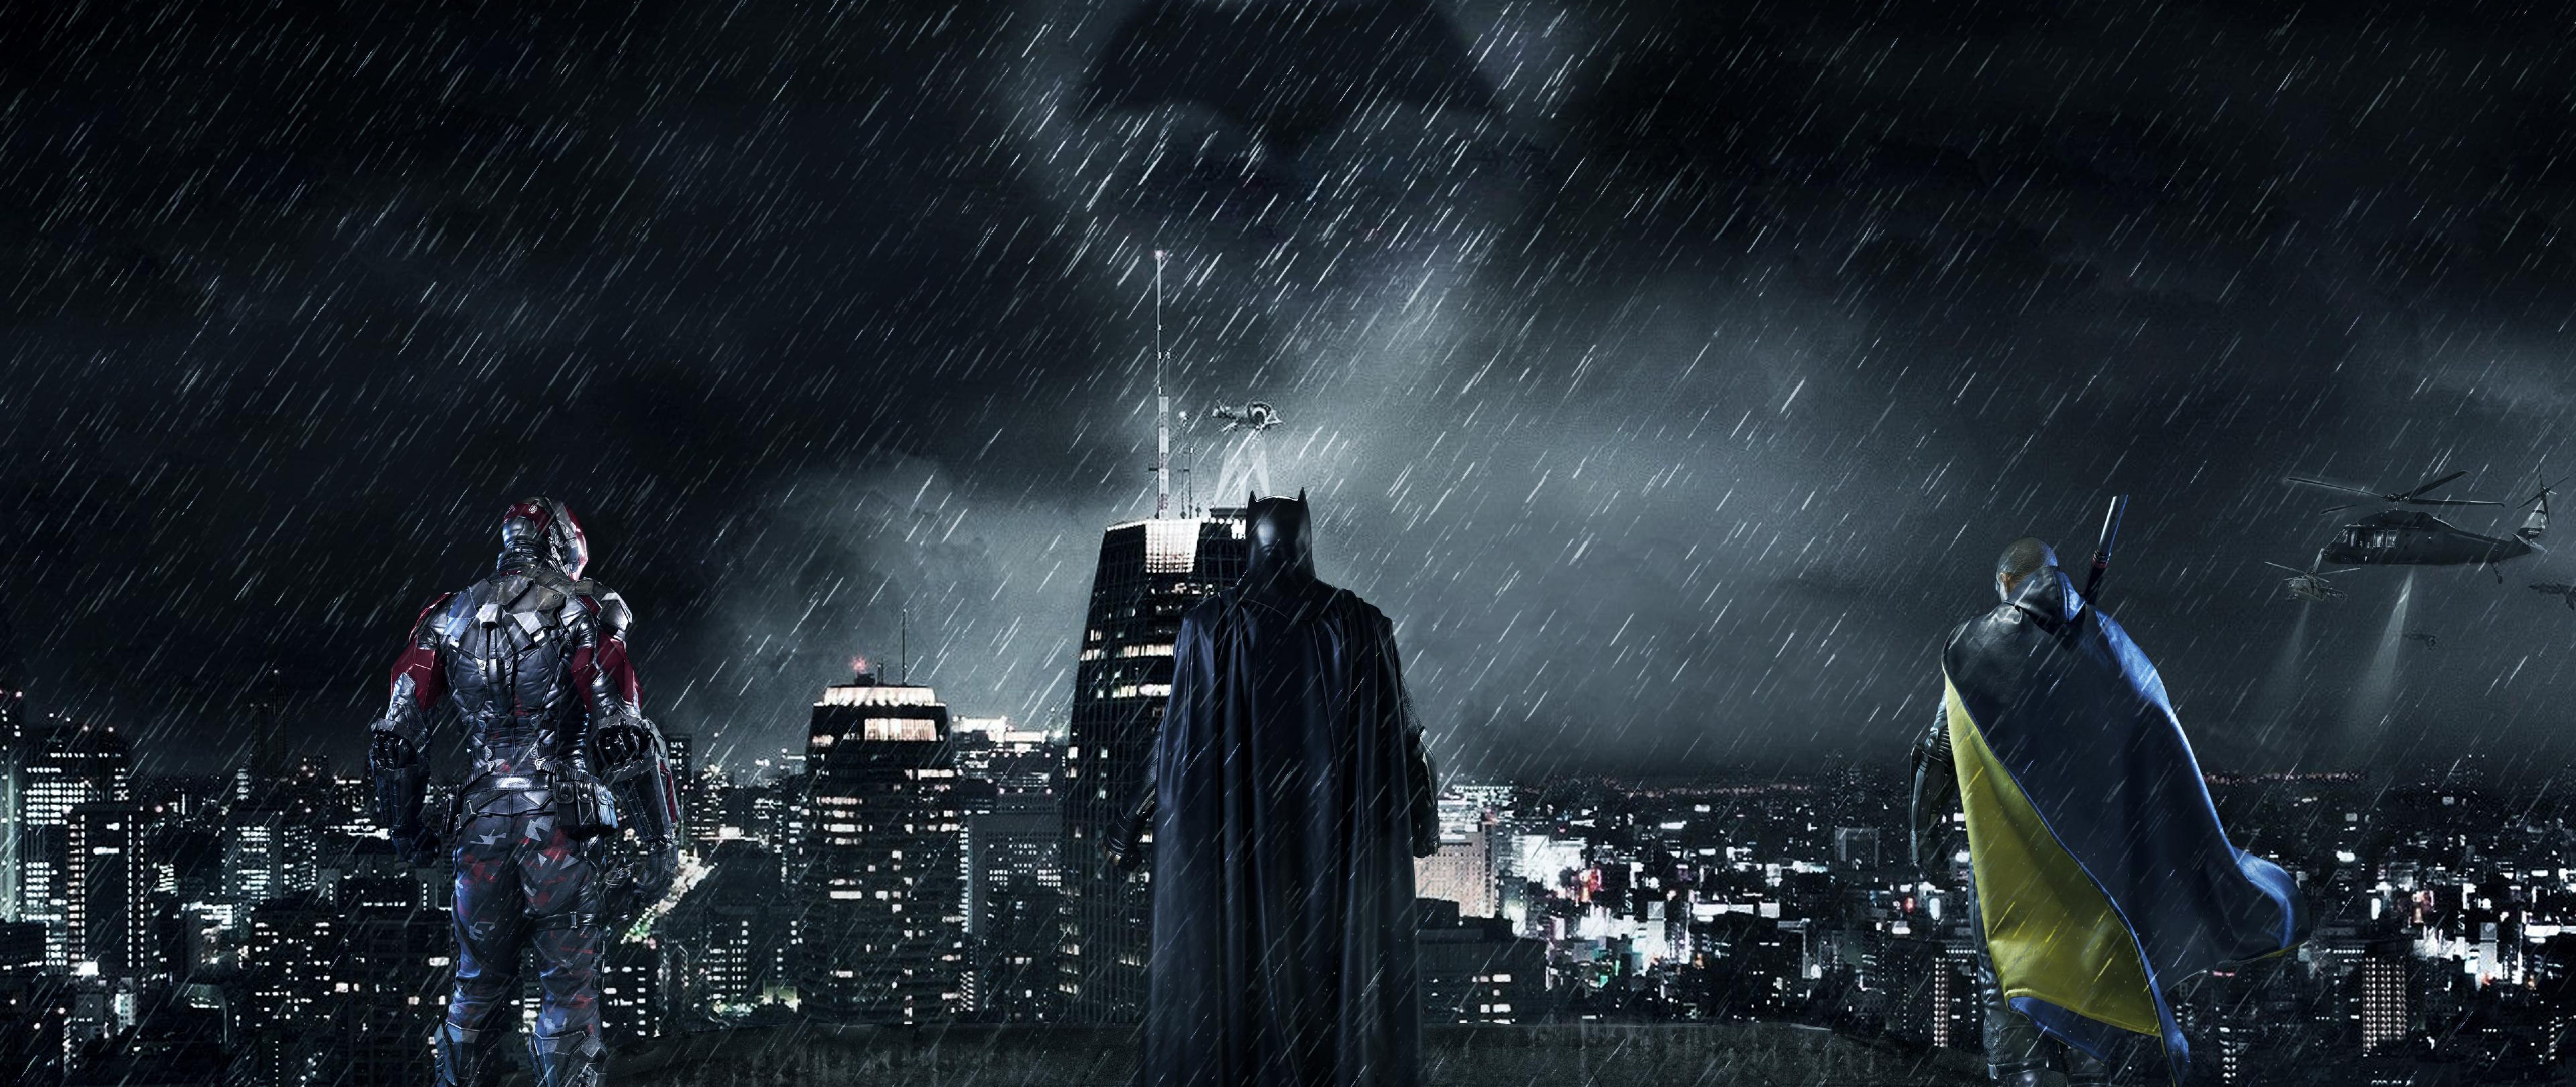 Free Download Gotham City Batman HD Wallpaper for Desktop and Mobiles 4K Ultra HD Wide TV